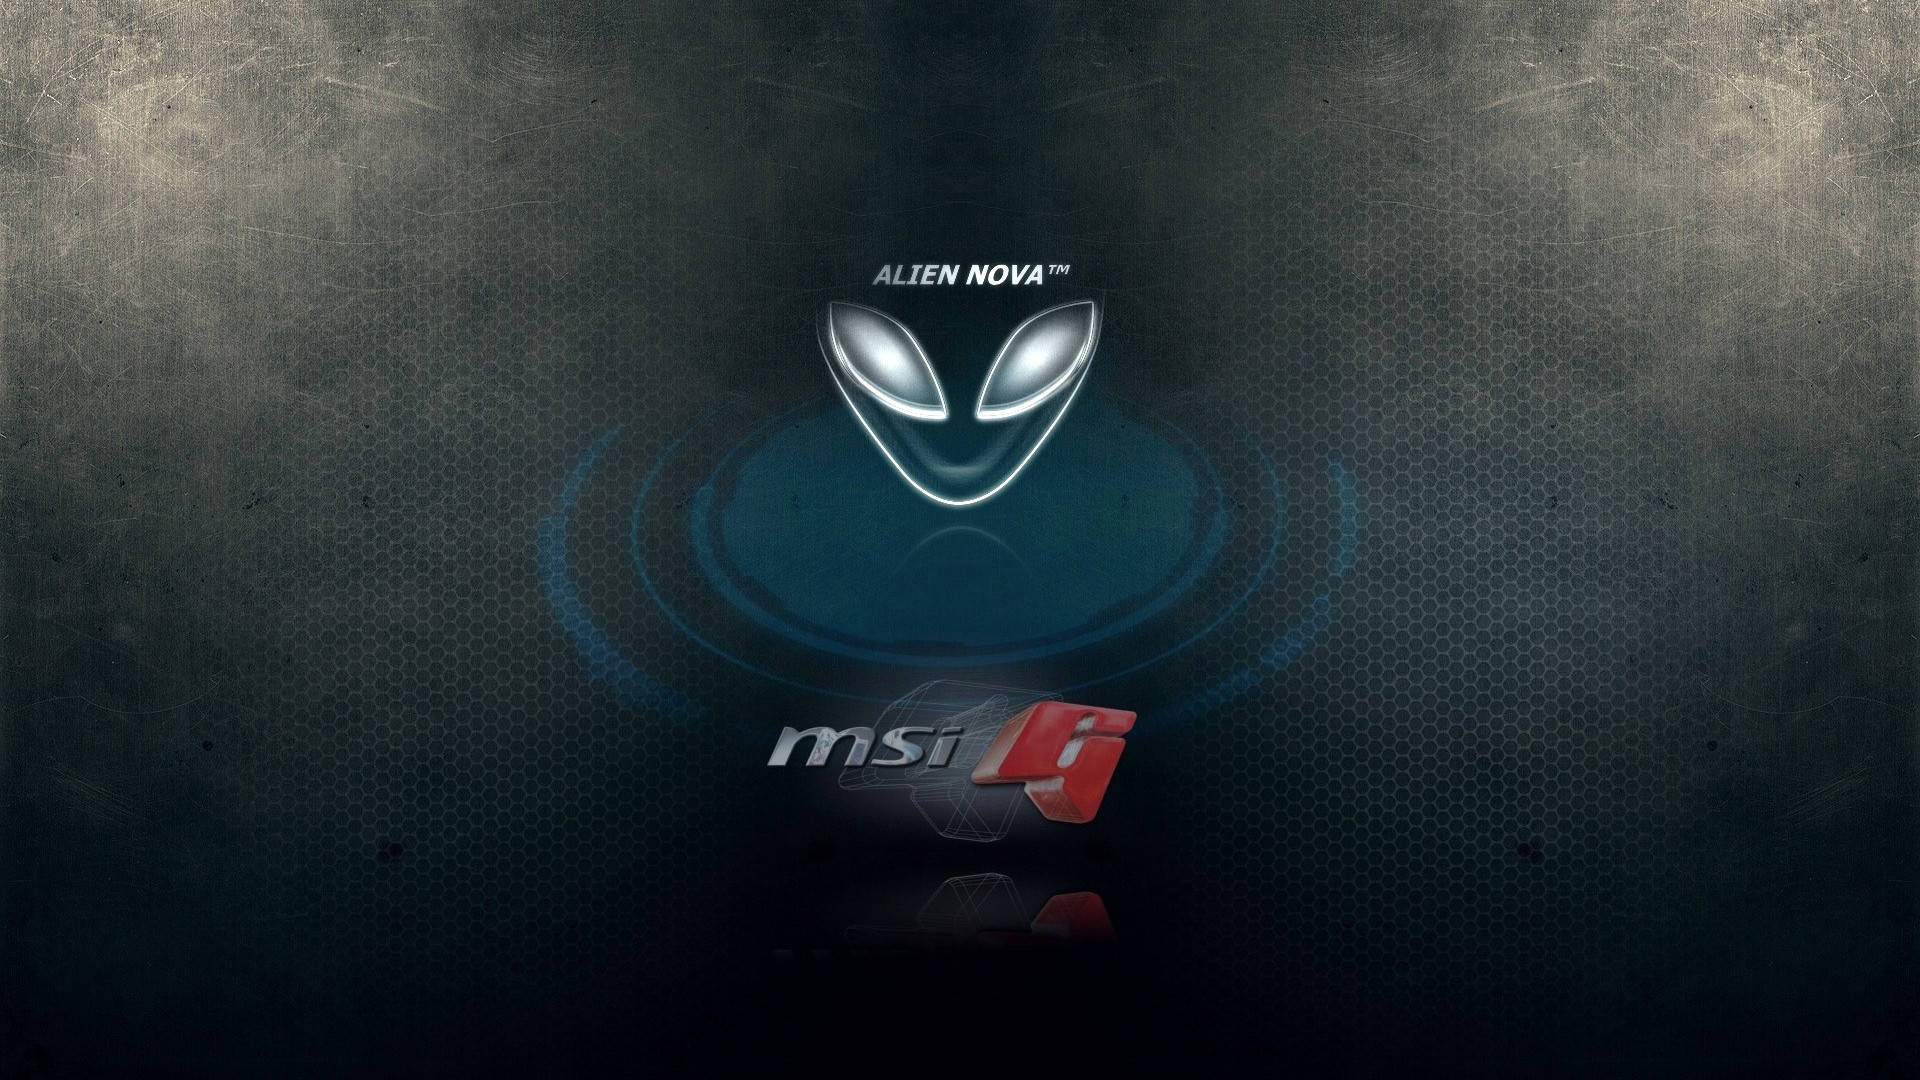 Alienware Logo And Msi Logo Background